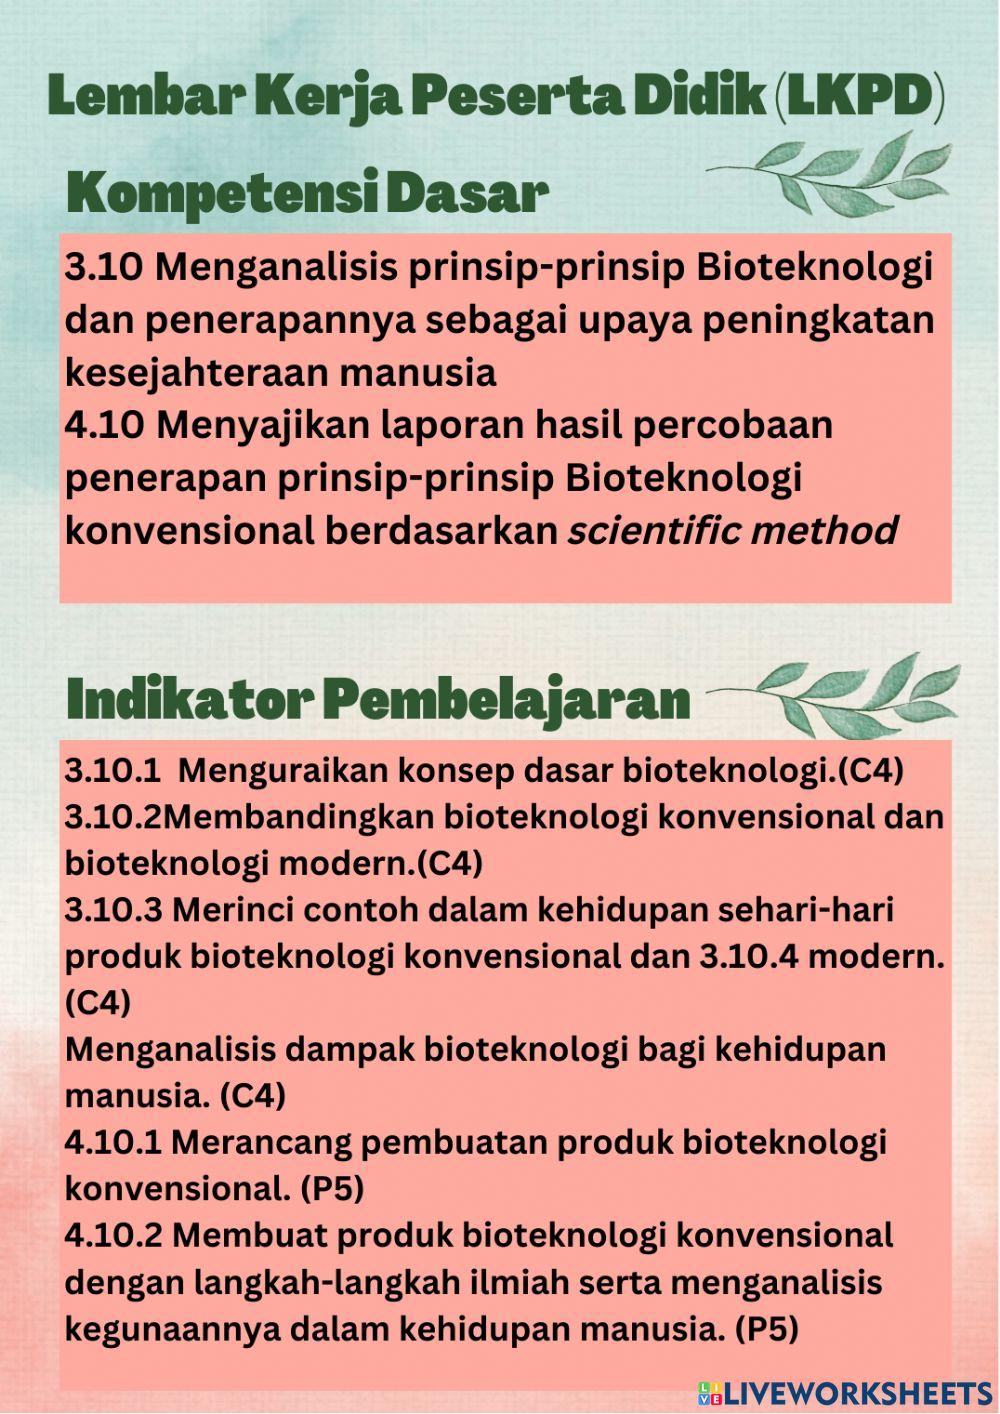 Lkpd proyek bioteknologi